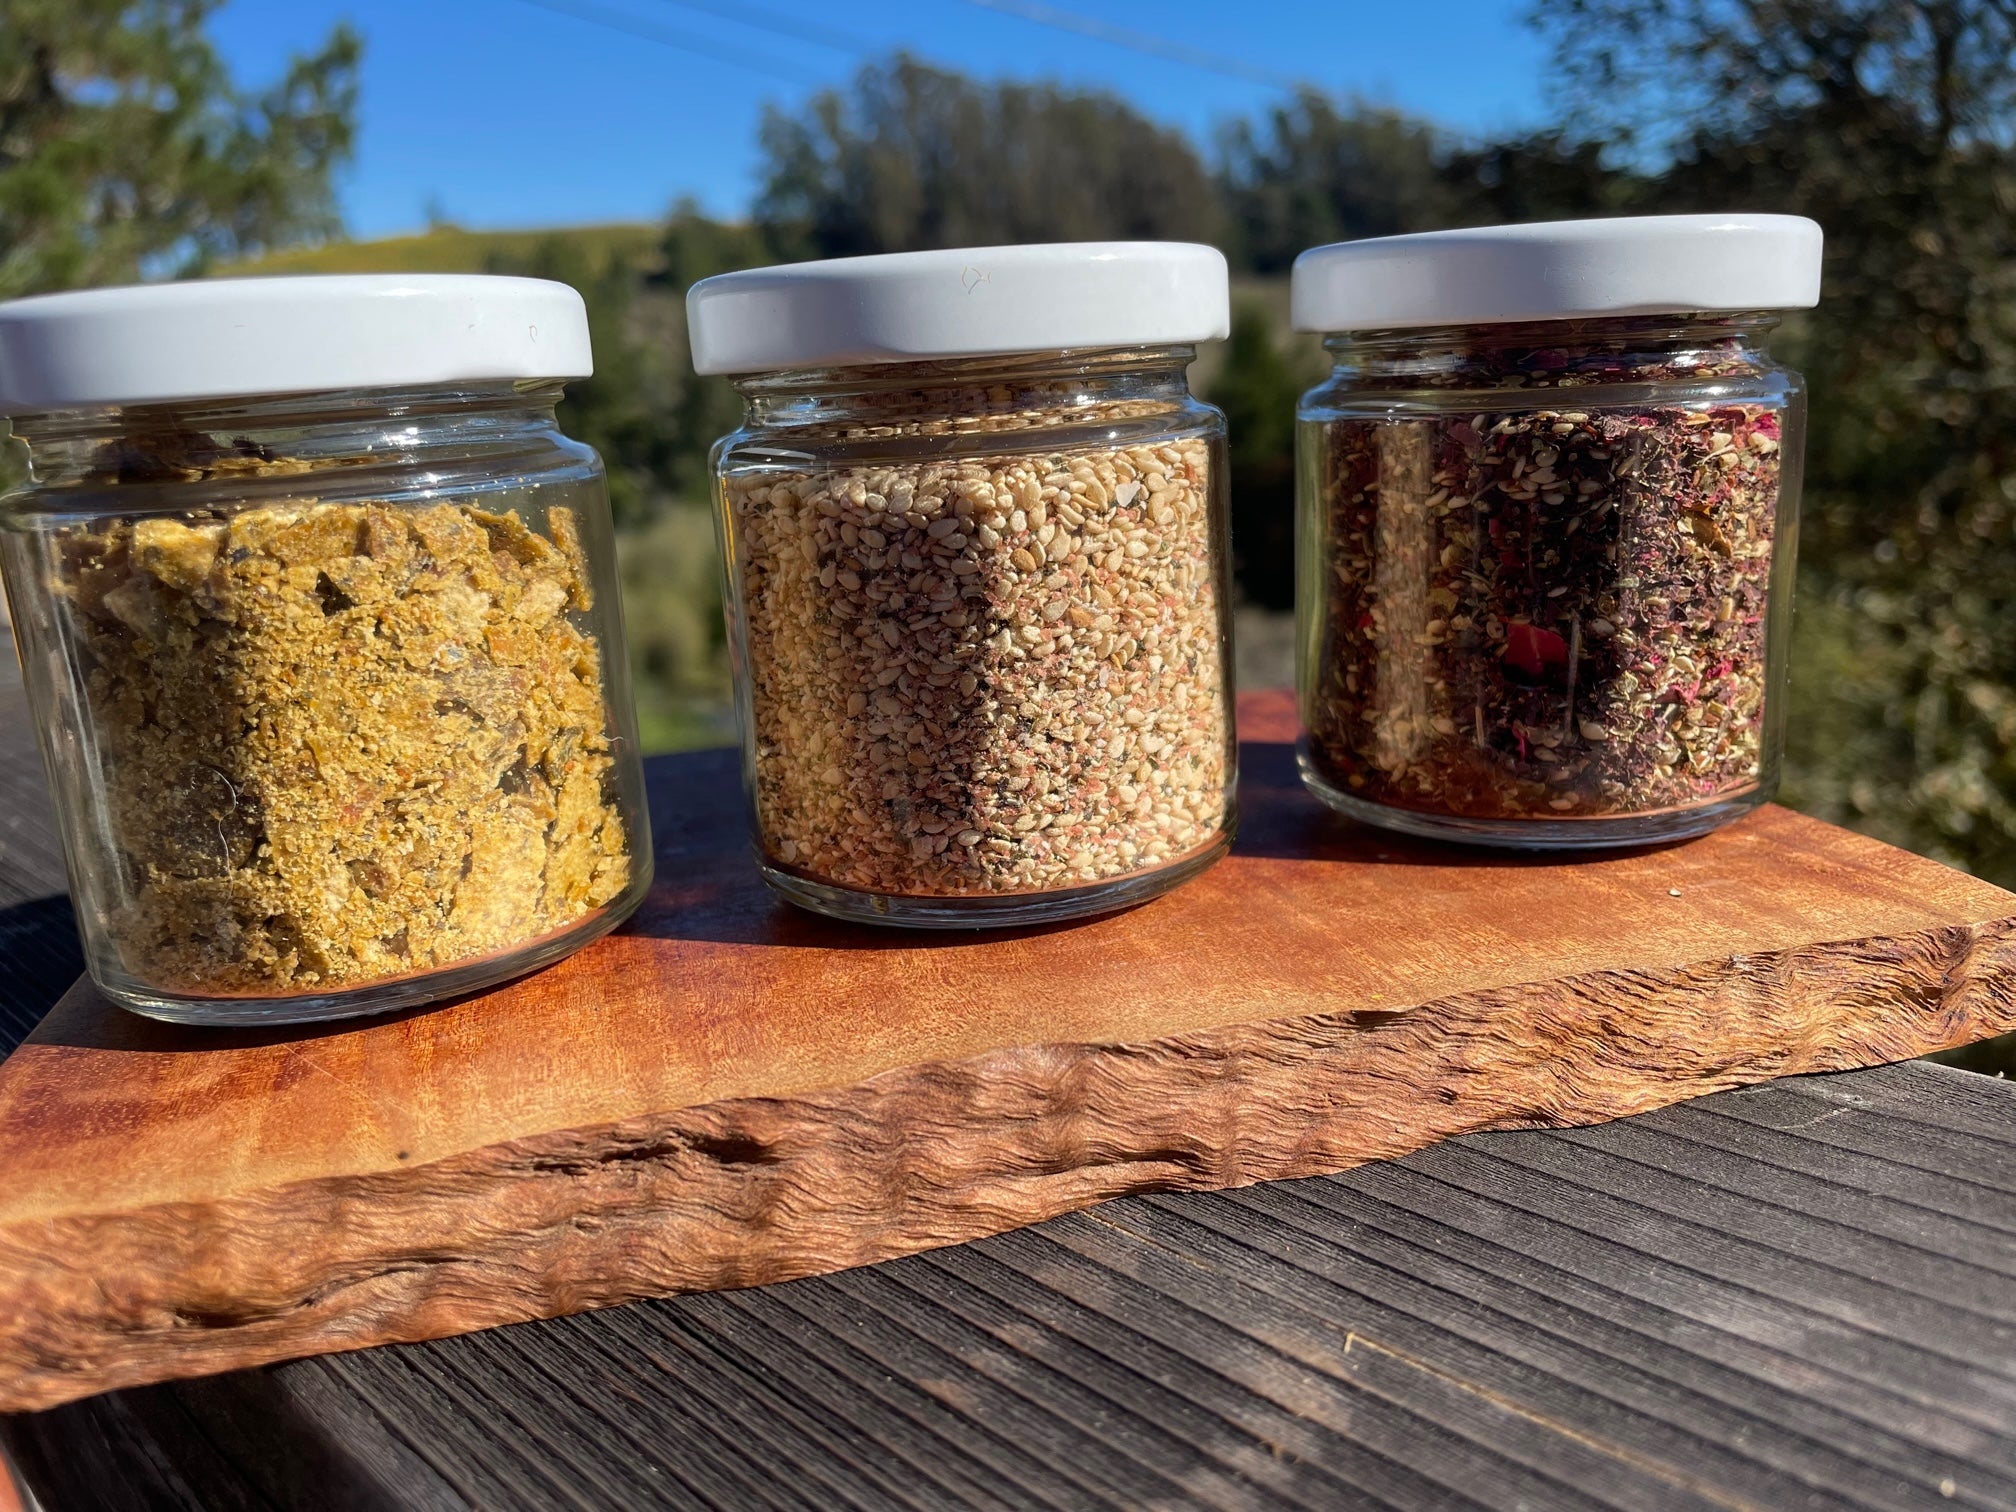 Organic Spice Blend Sample Gift Box